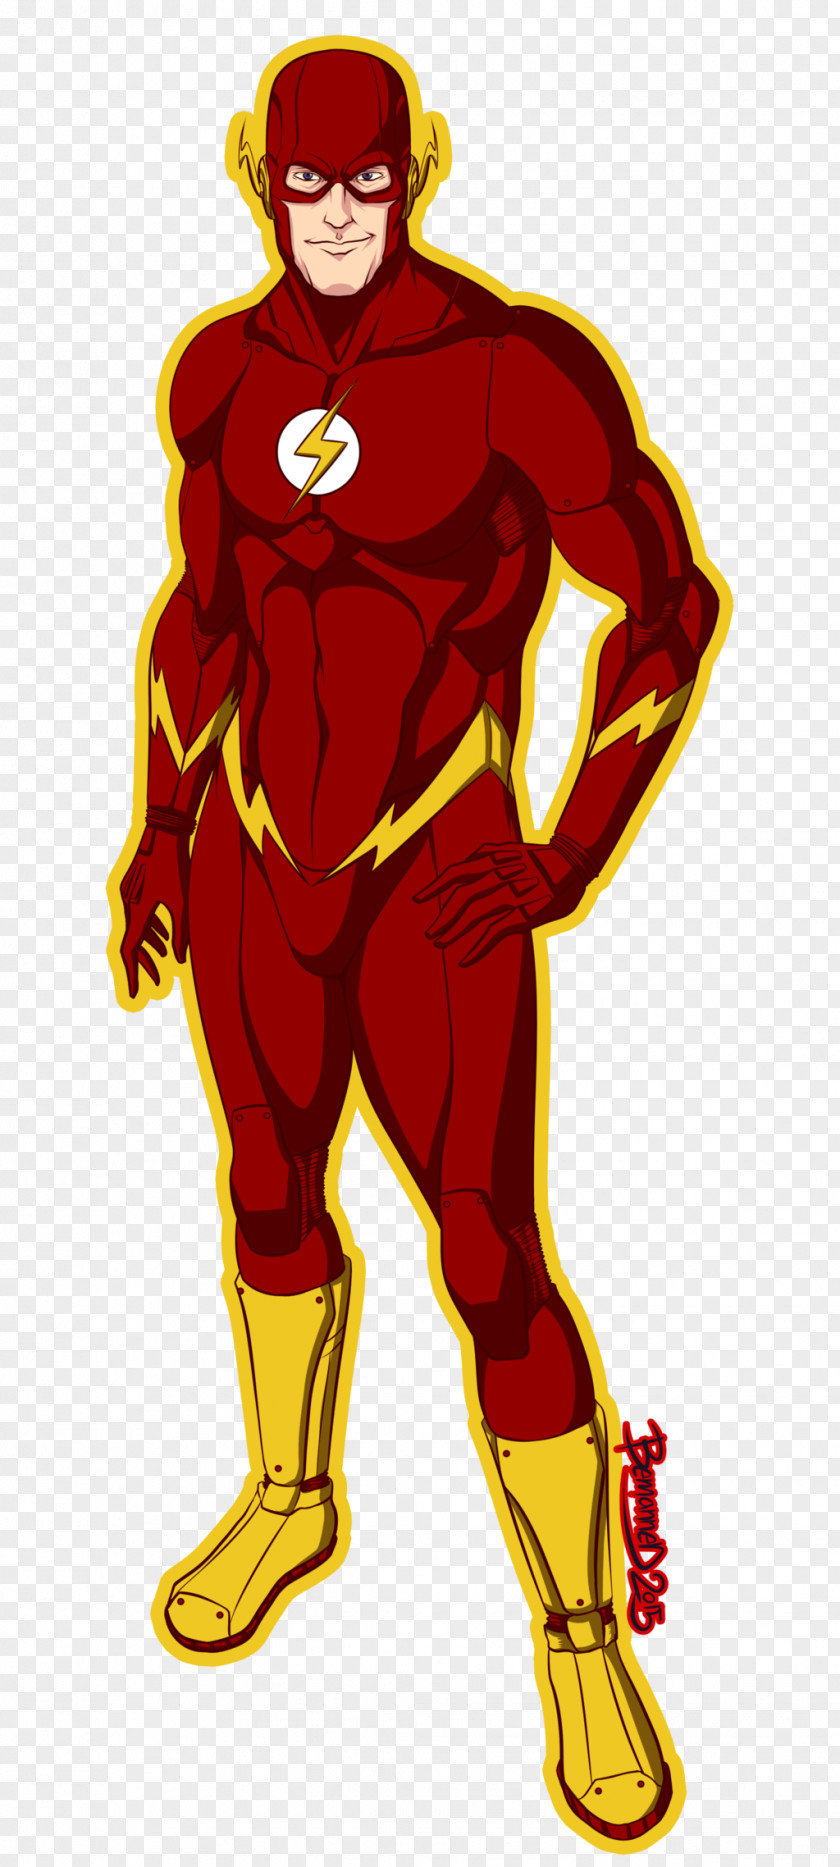 Superhero Cartoon Muscle PNG